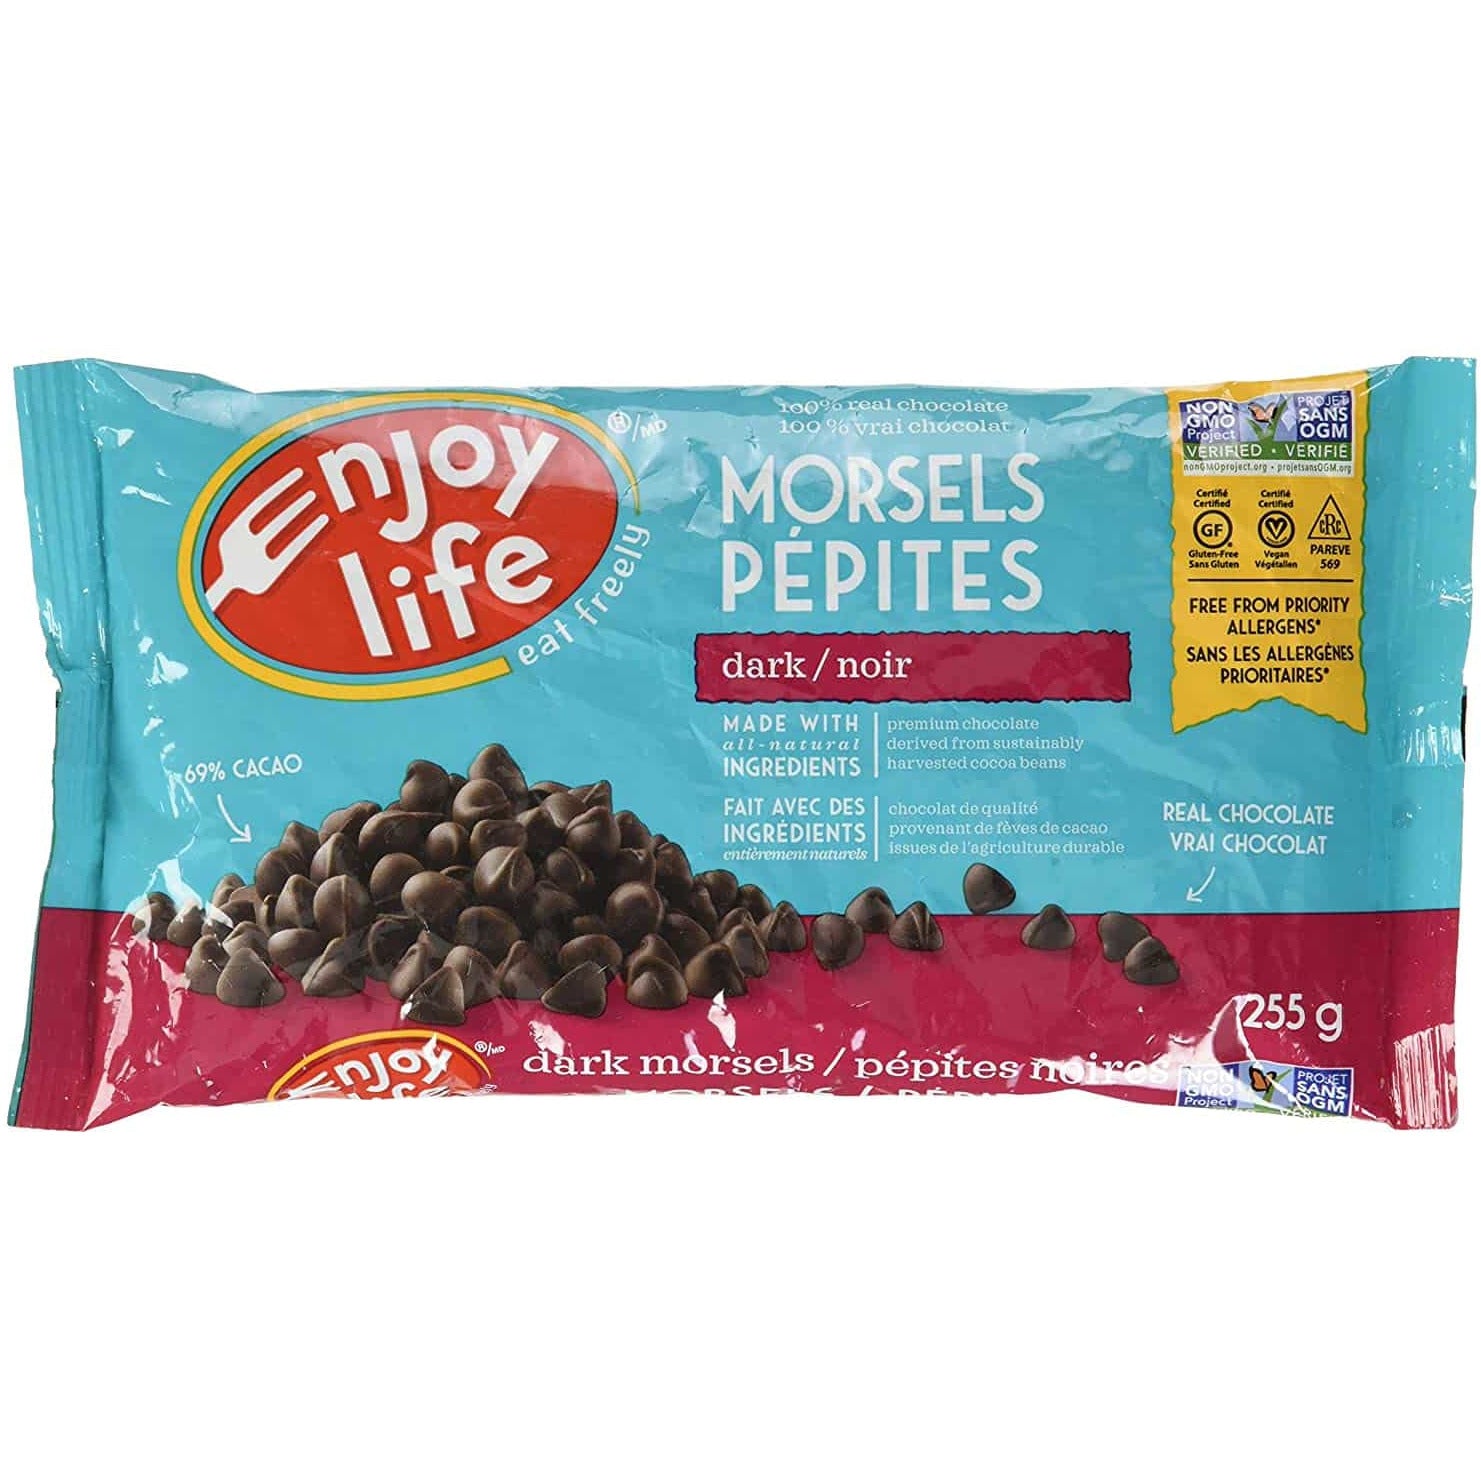 Enjoy Life Dark Chocolate Morsels, 9 Ounce